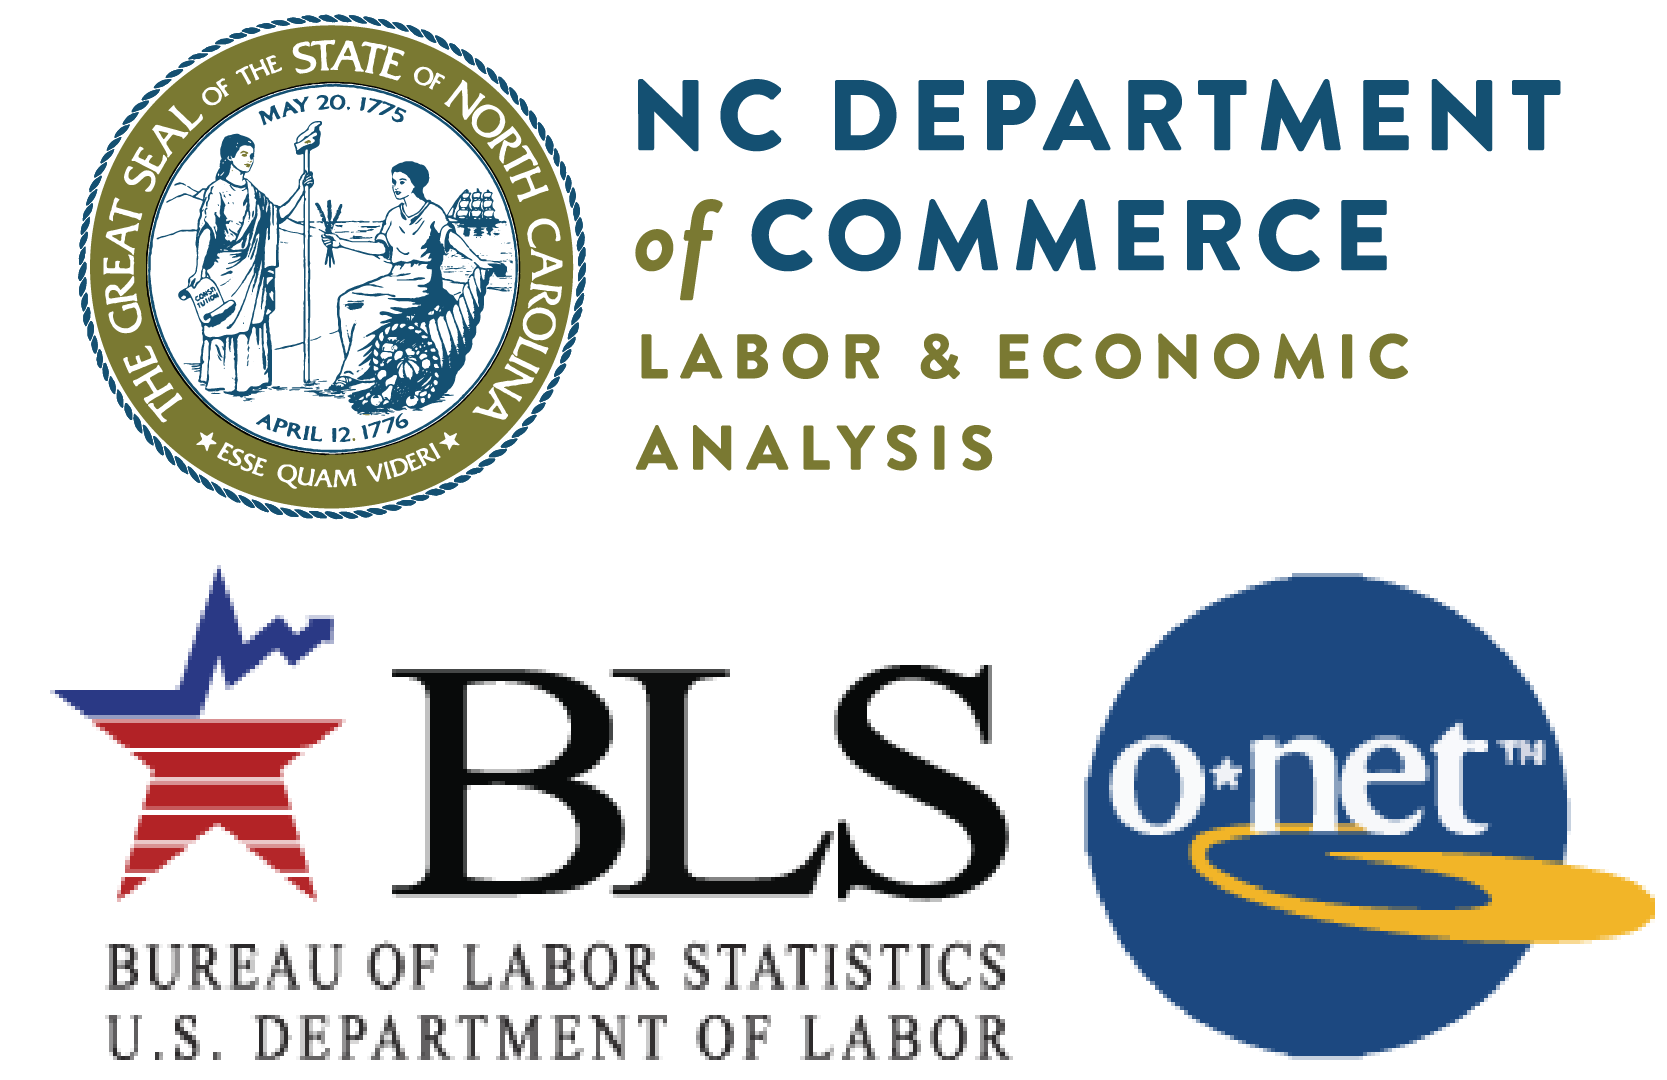 Logos for Labor & Economic Analysis, Bureau of Labor Statistics, and O*Net